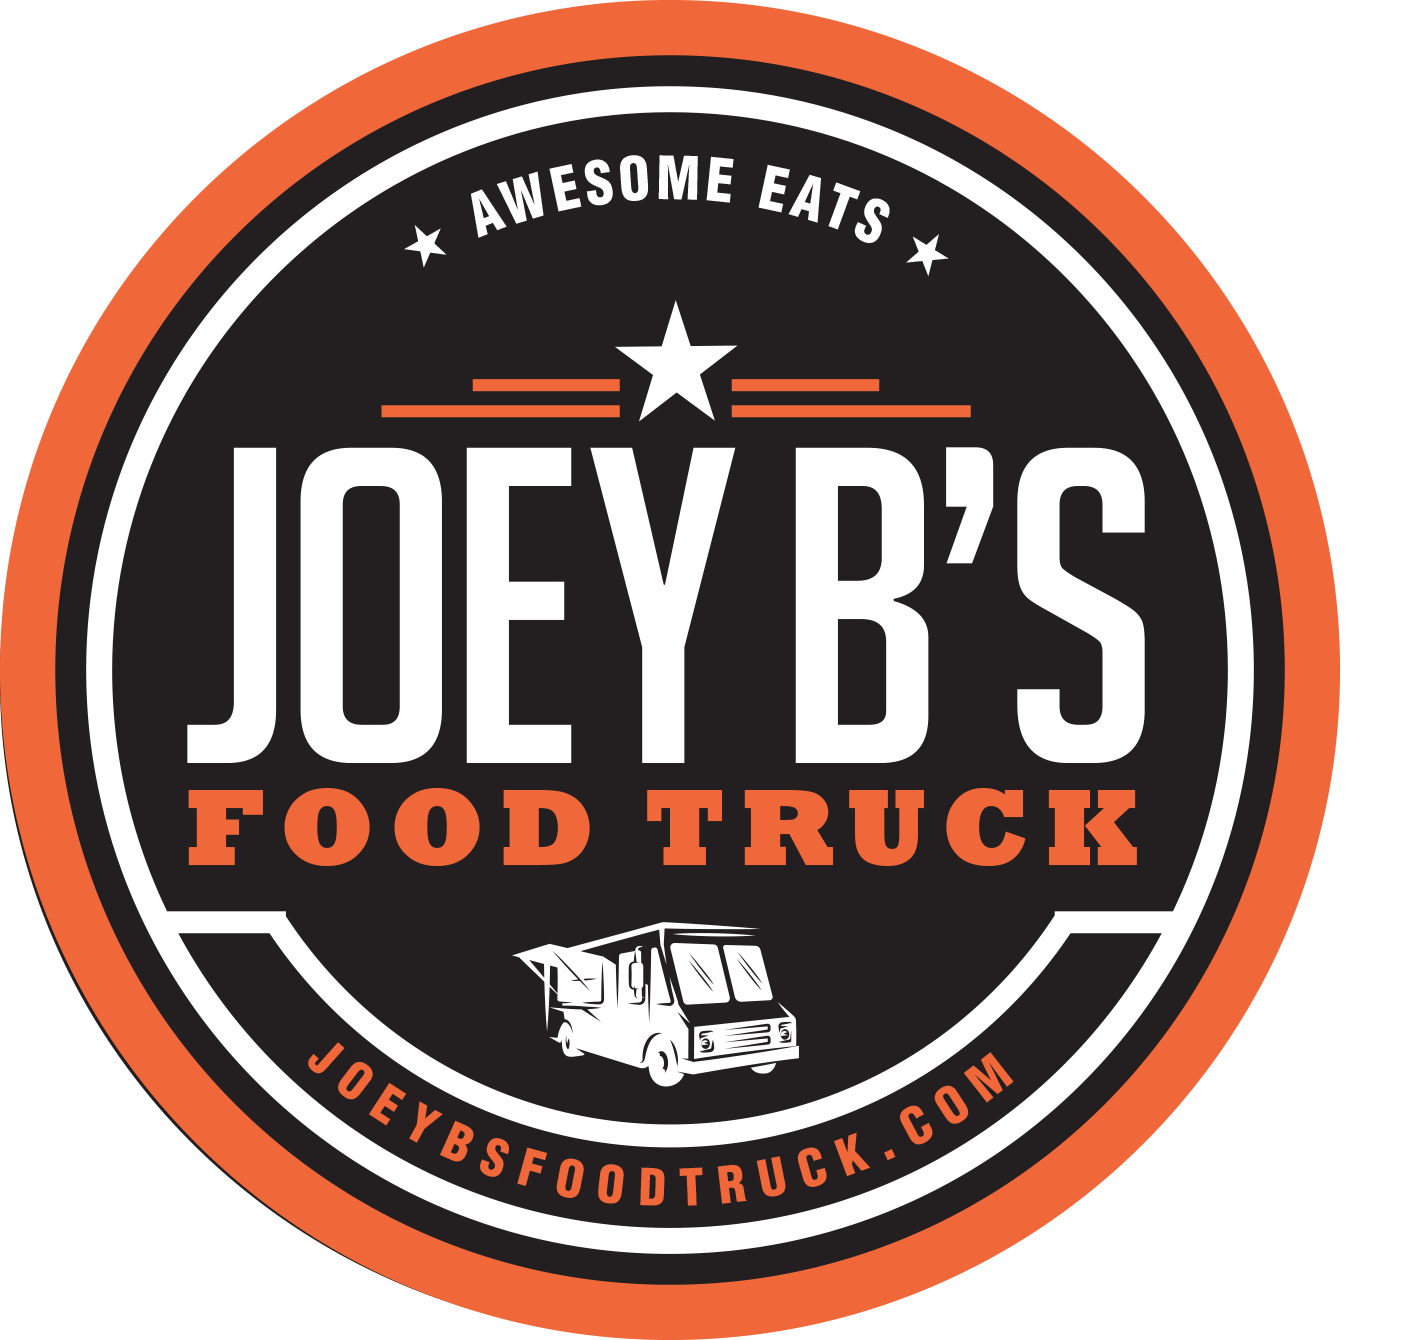 Food Truck Logo - Joey B's Food Truck